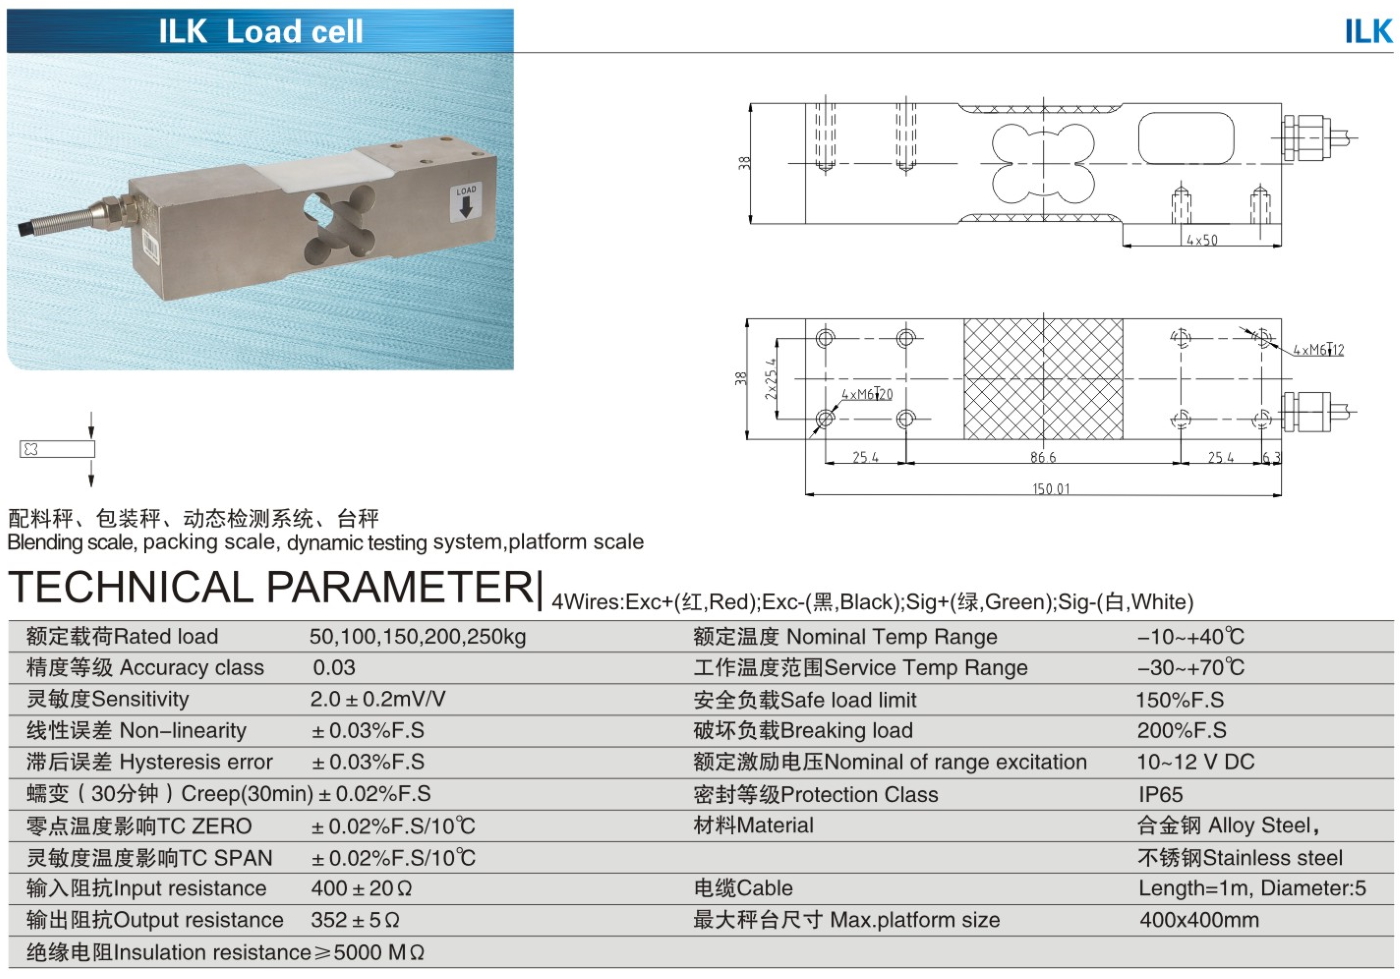 img/loadcell-images/alloysteel-singlepoint/KELI_ILK_Loadcell-TTM_Teknoloji.jpg